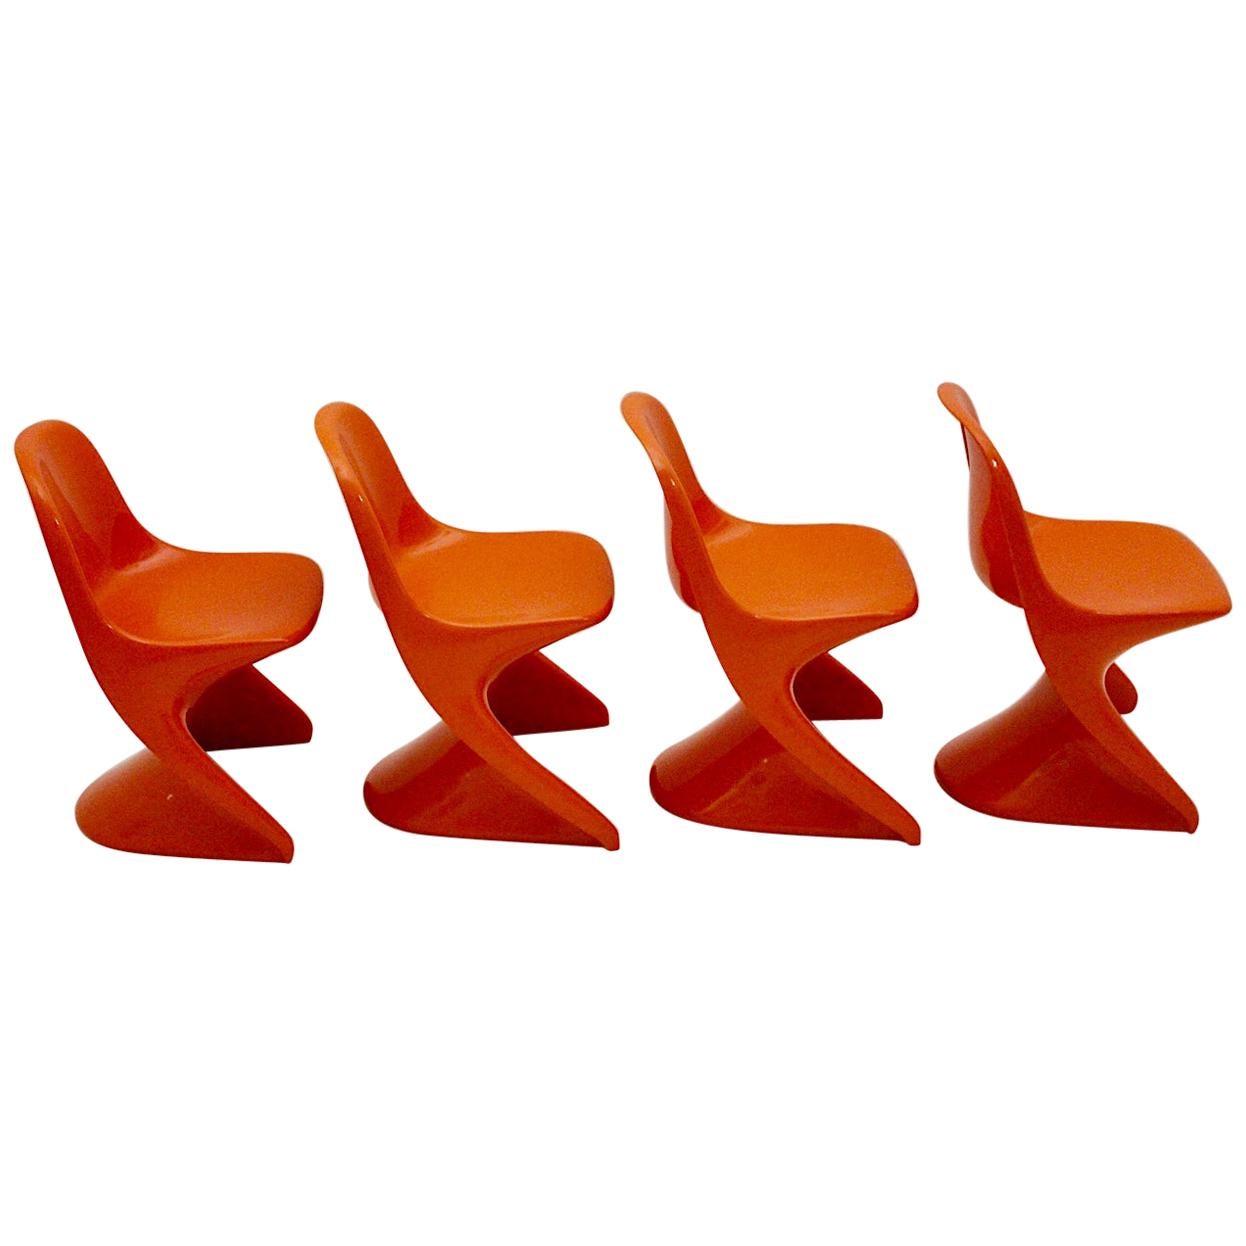 Space Age Plastic Four Vintage Orange Children Stacking Chairs 1970s Casalino